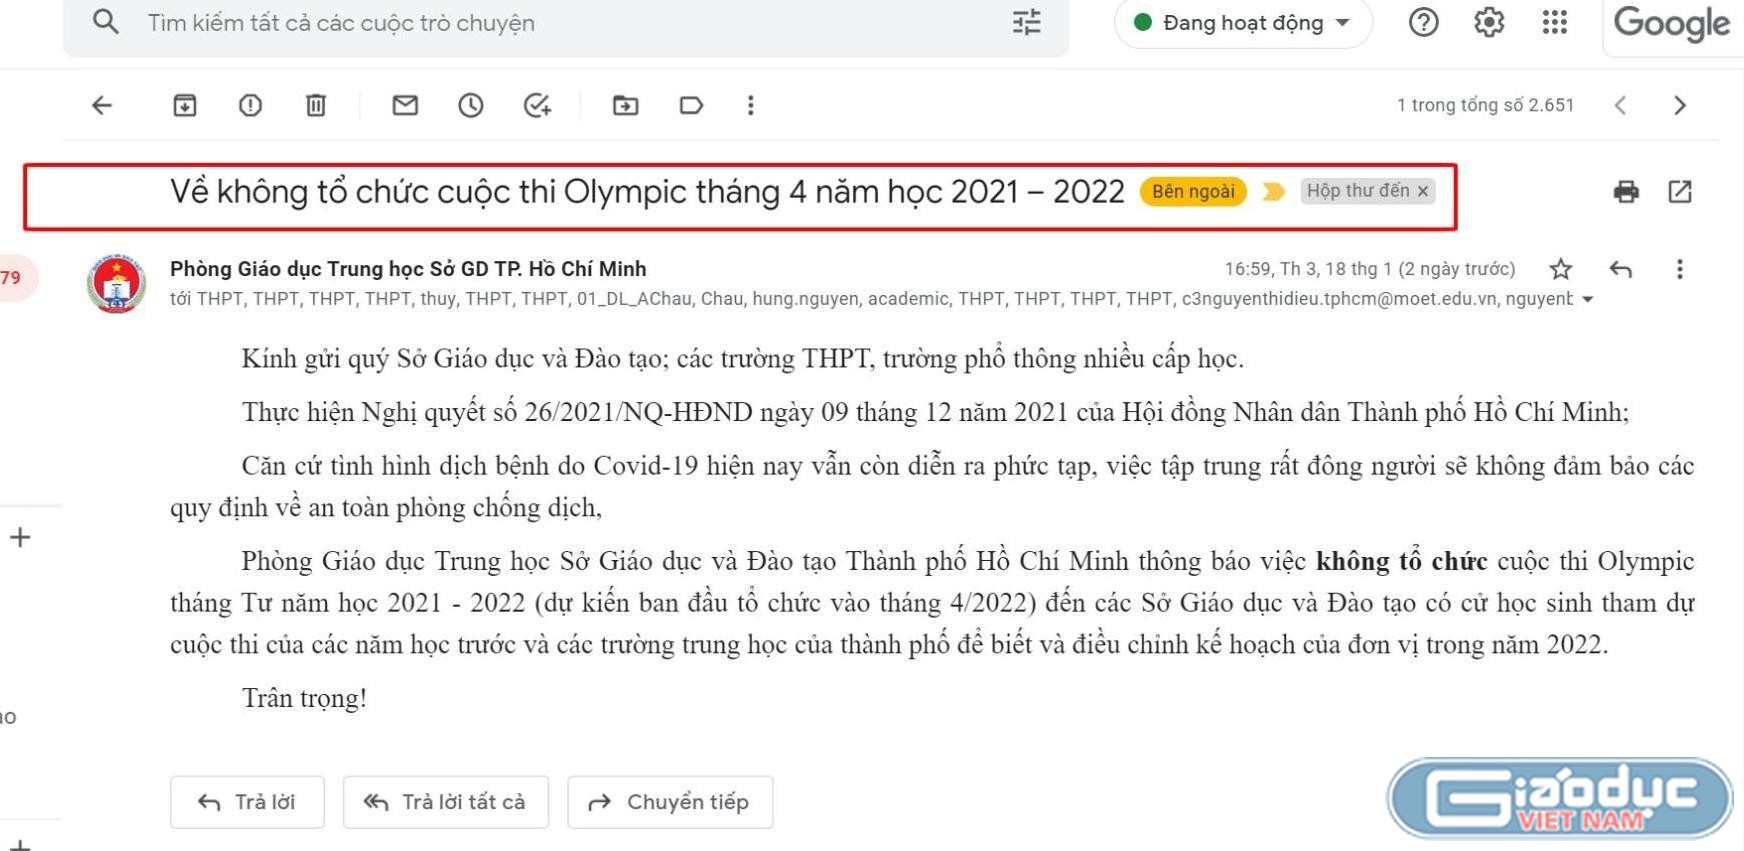 Ket qua olympic thang 4 mo rong 2021 ahr0chm6ly9wag90by1jbxmtz2lhb2r1yy56ywrulnzul1vwbg9hzgvklziwmjivzwr4d3bjcwrolziwmjjfmdffmjevz2r2bi10ag9uz2jhby1nawfvzhvjlw5ldc12bi0zndqzlmpwzw==